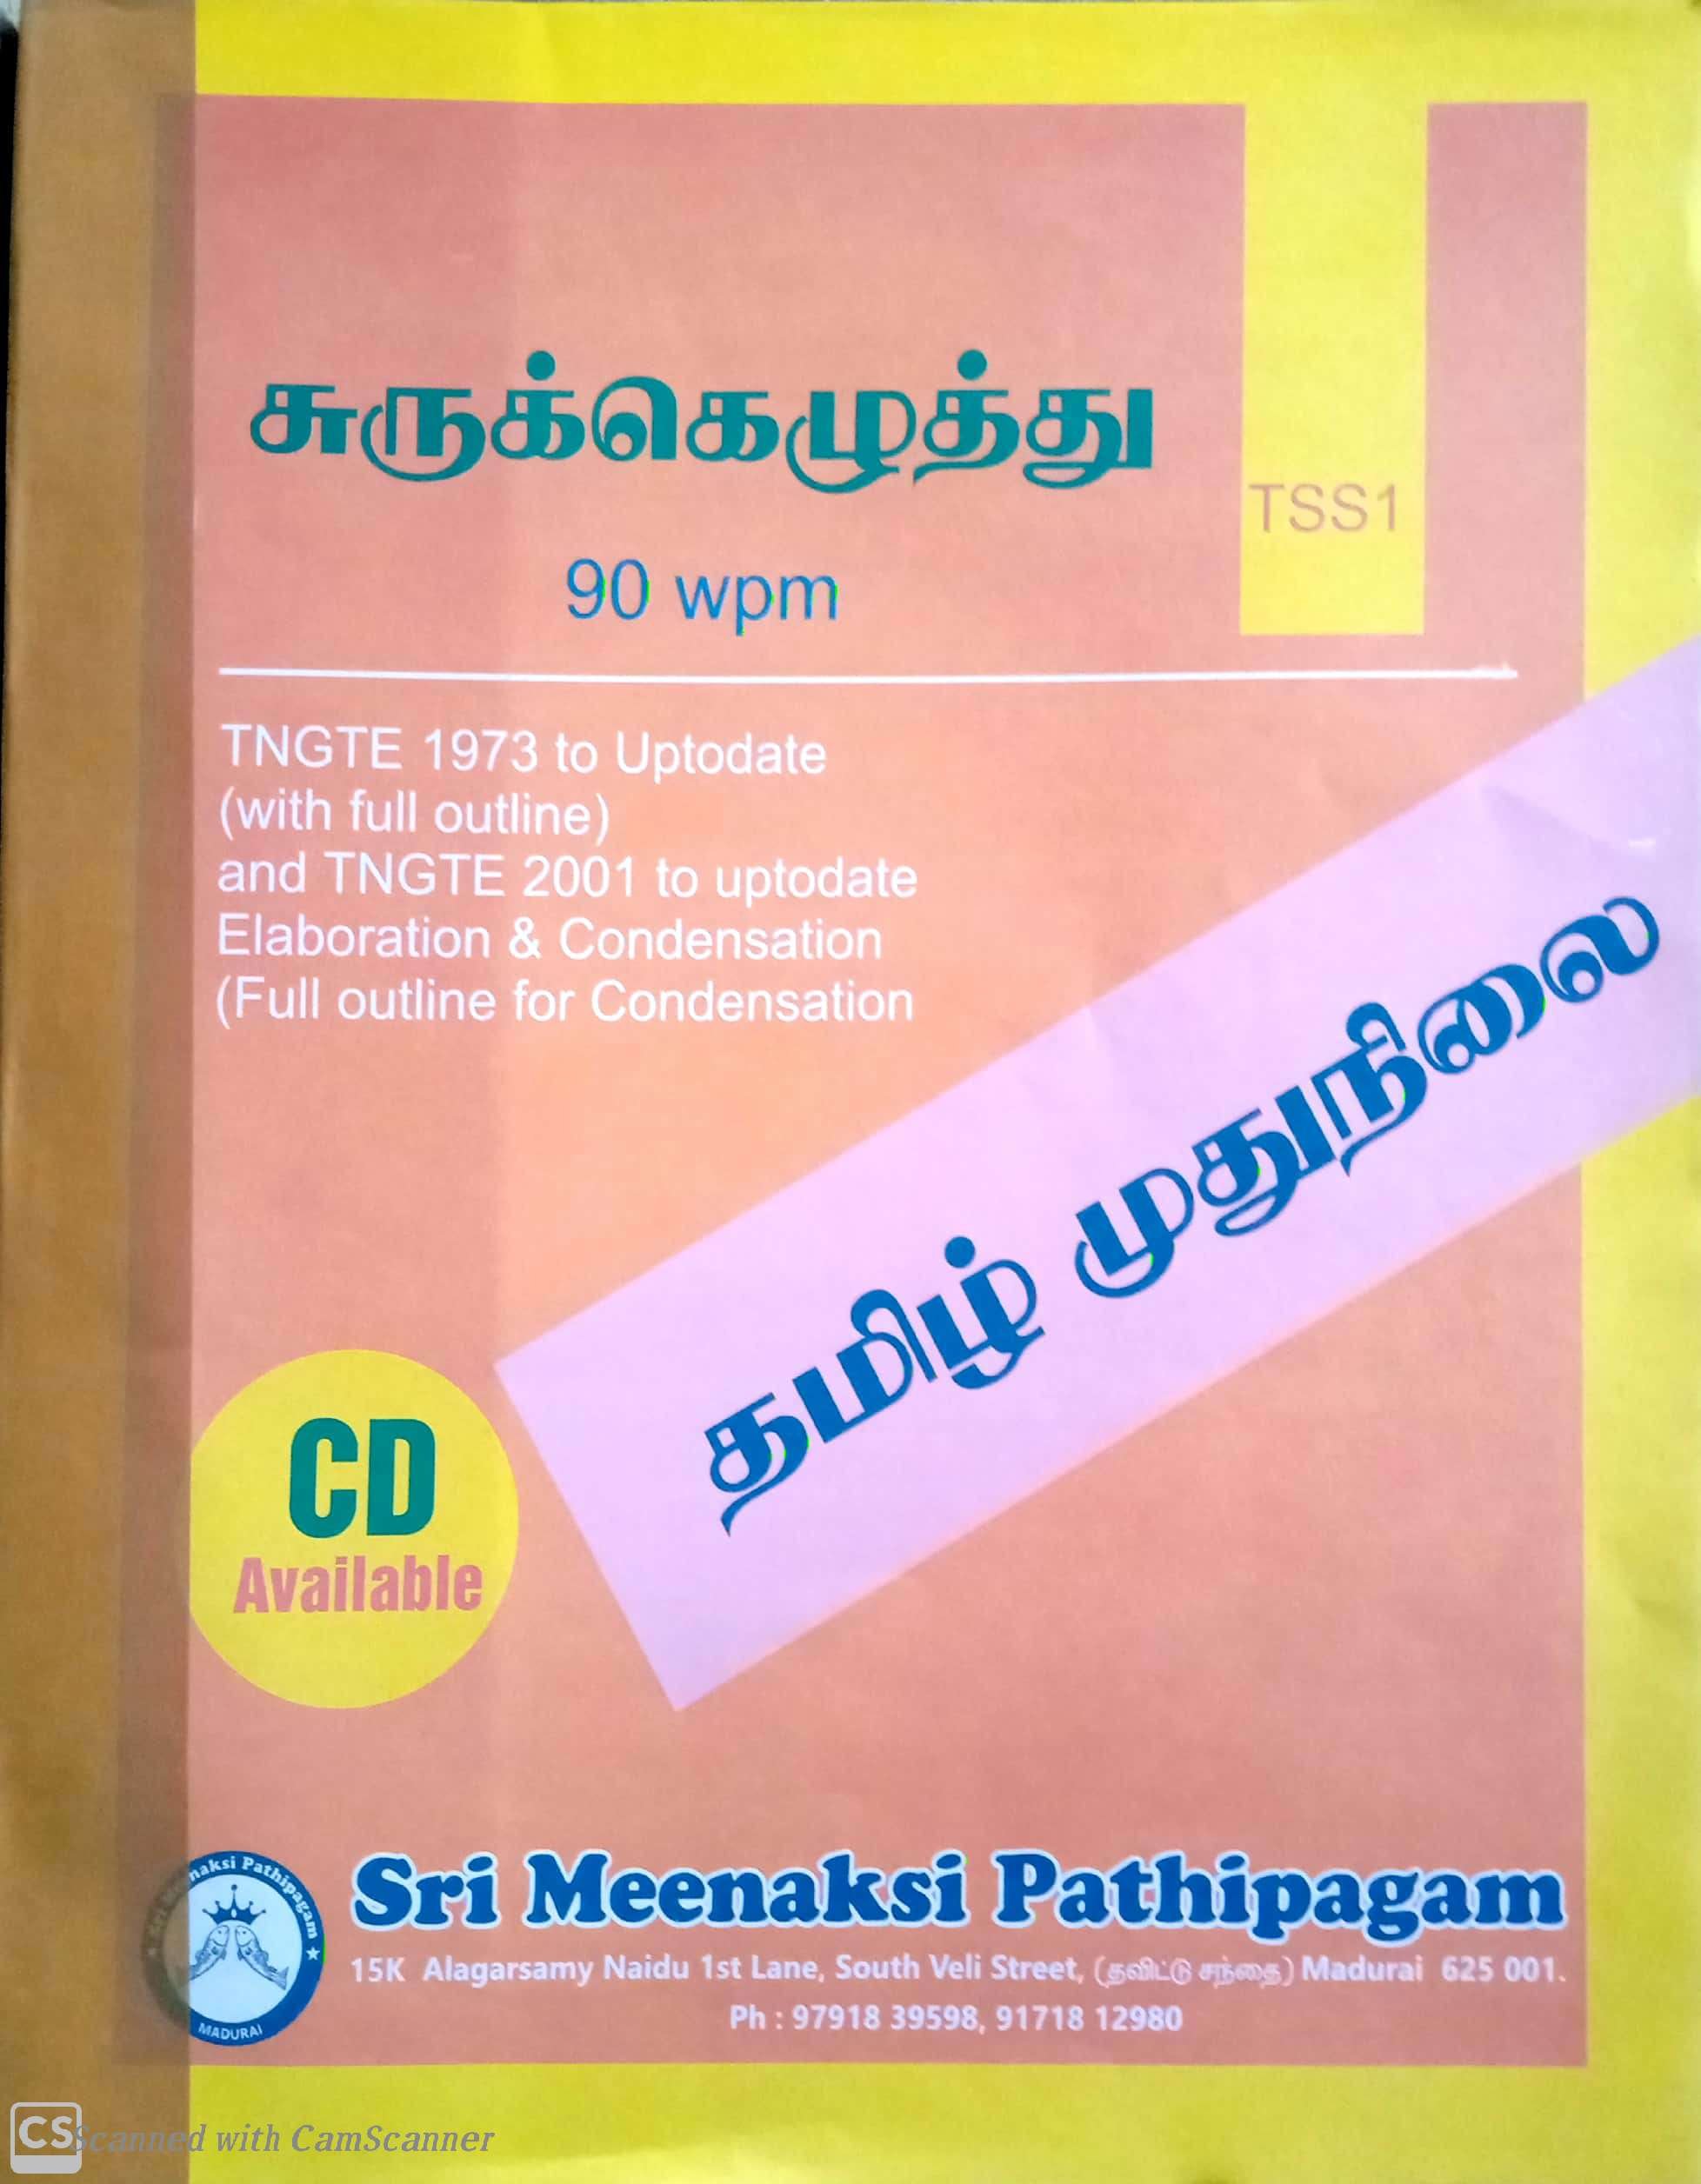 Tamil typewriting bigginer book